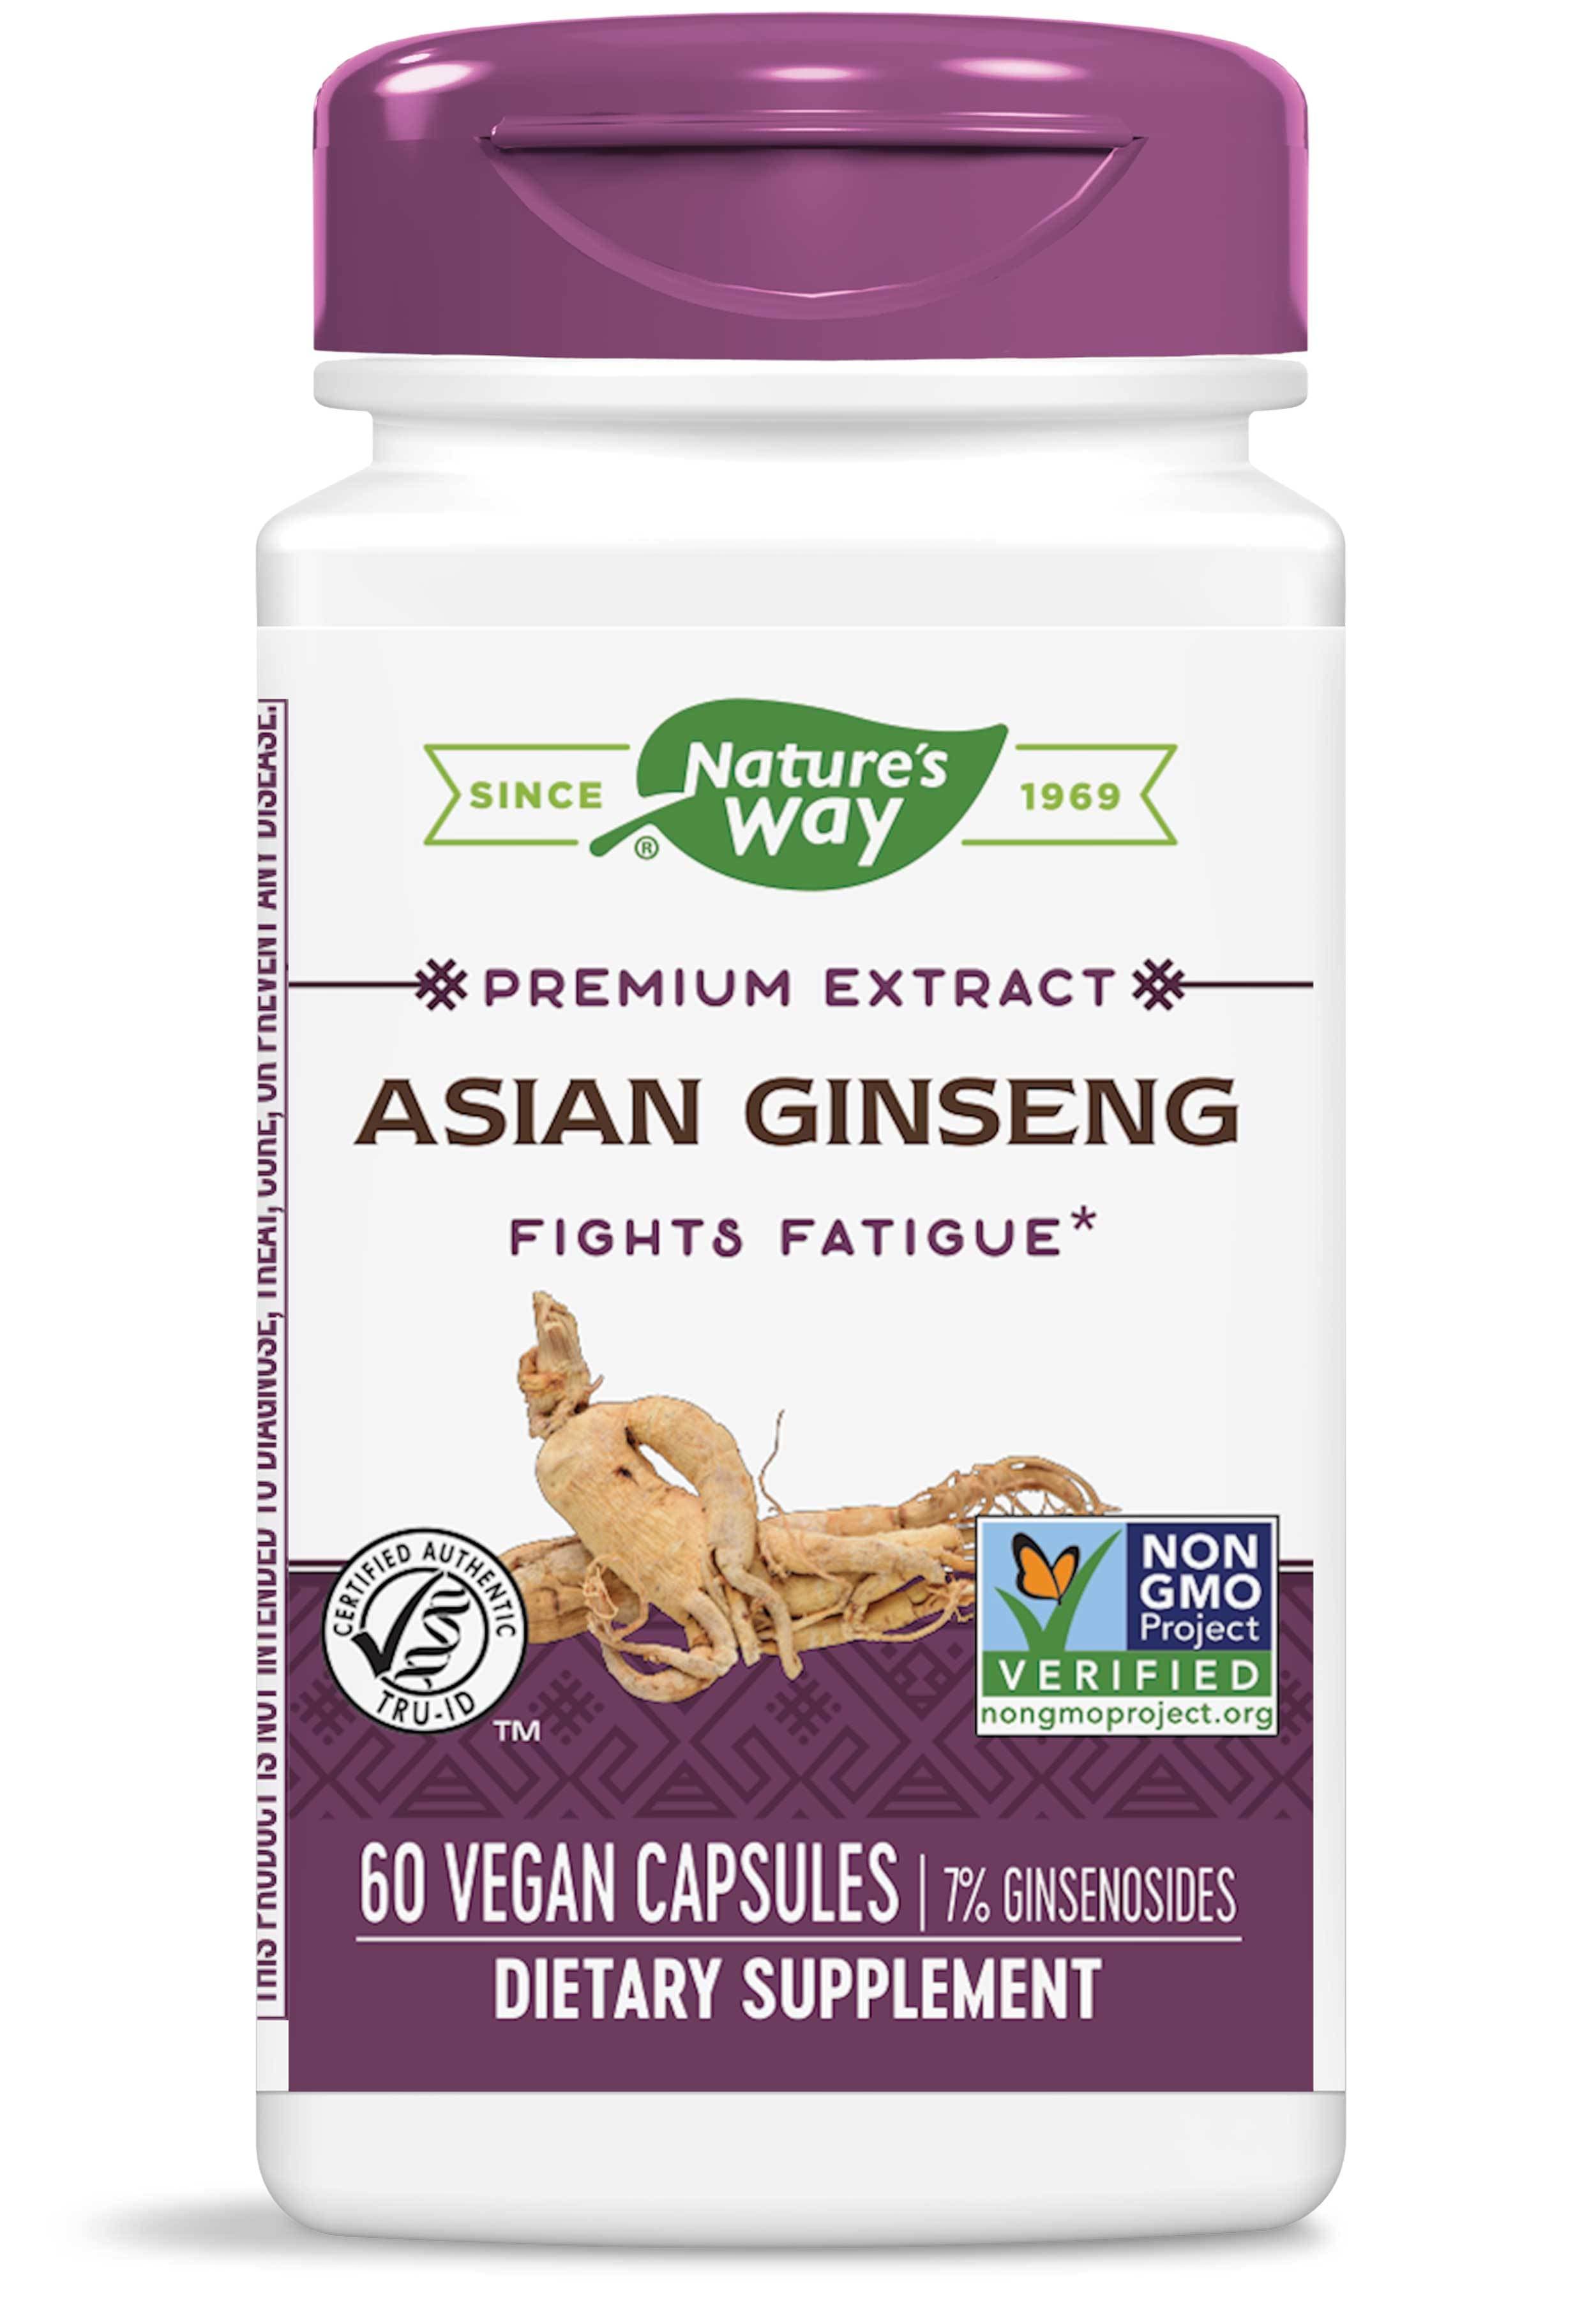 Nature's Way Asian Ginseng (Premium Extract)